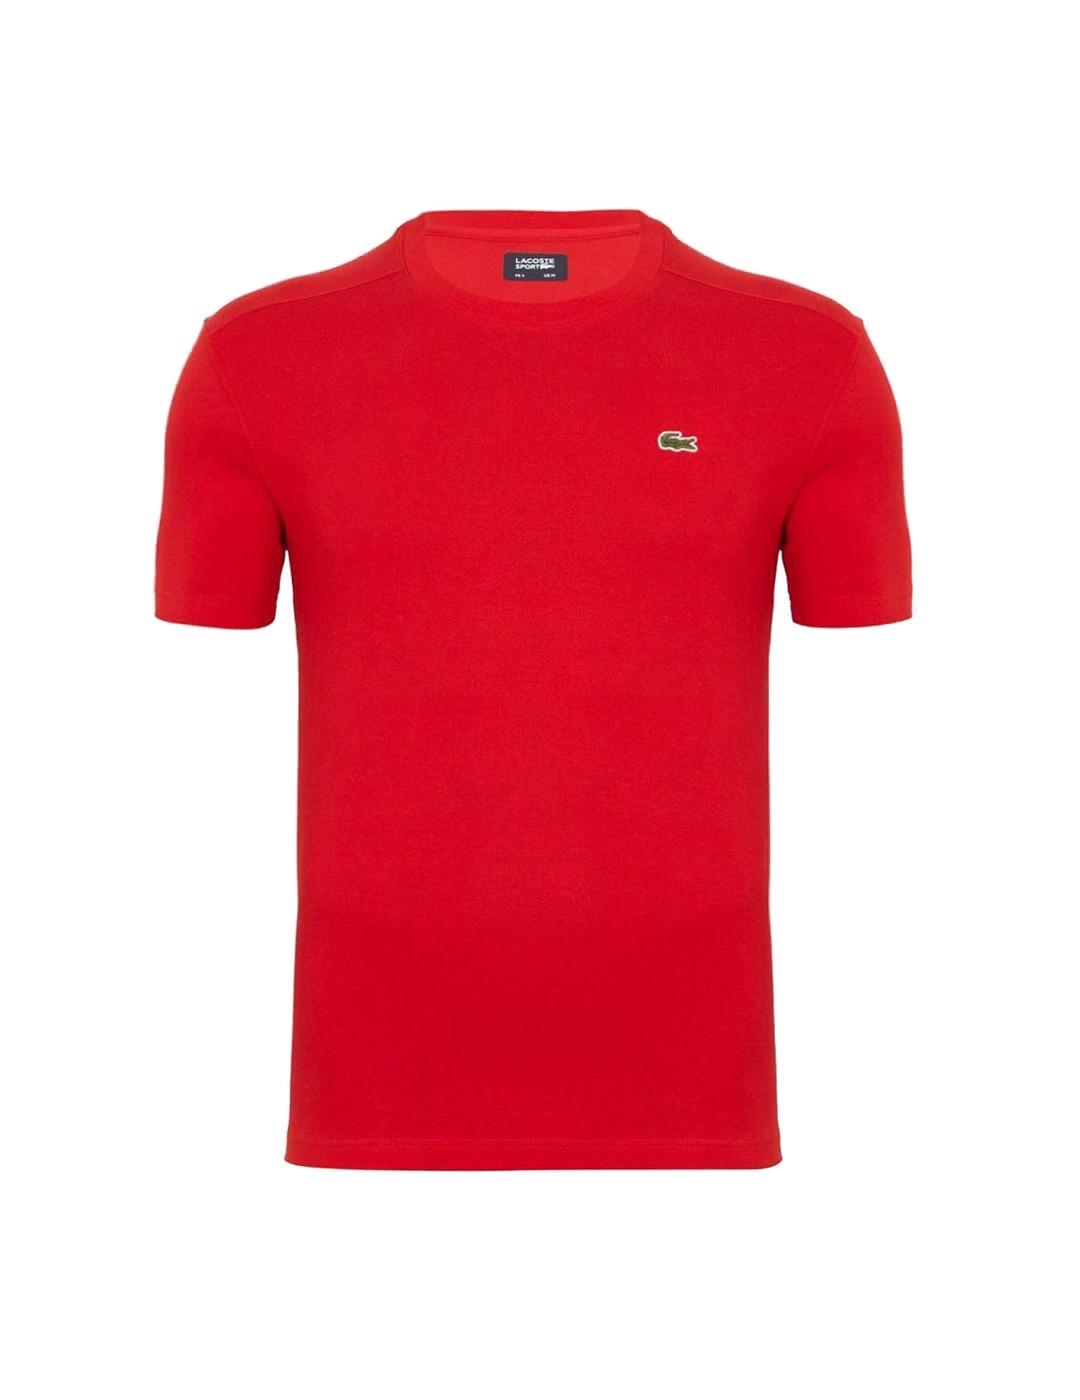 Camiseta básica Lacoste roja para hombre- z